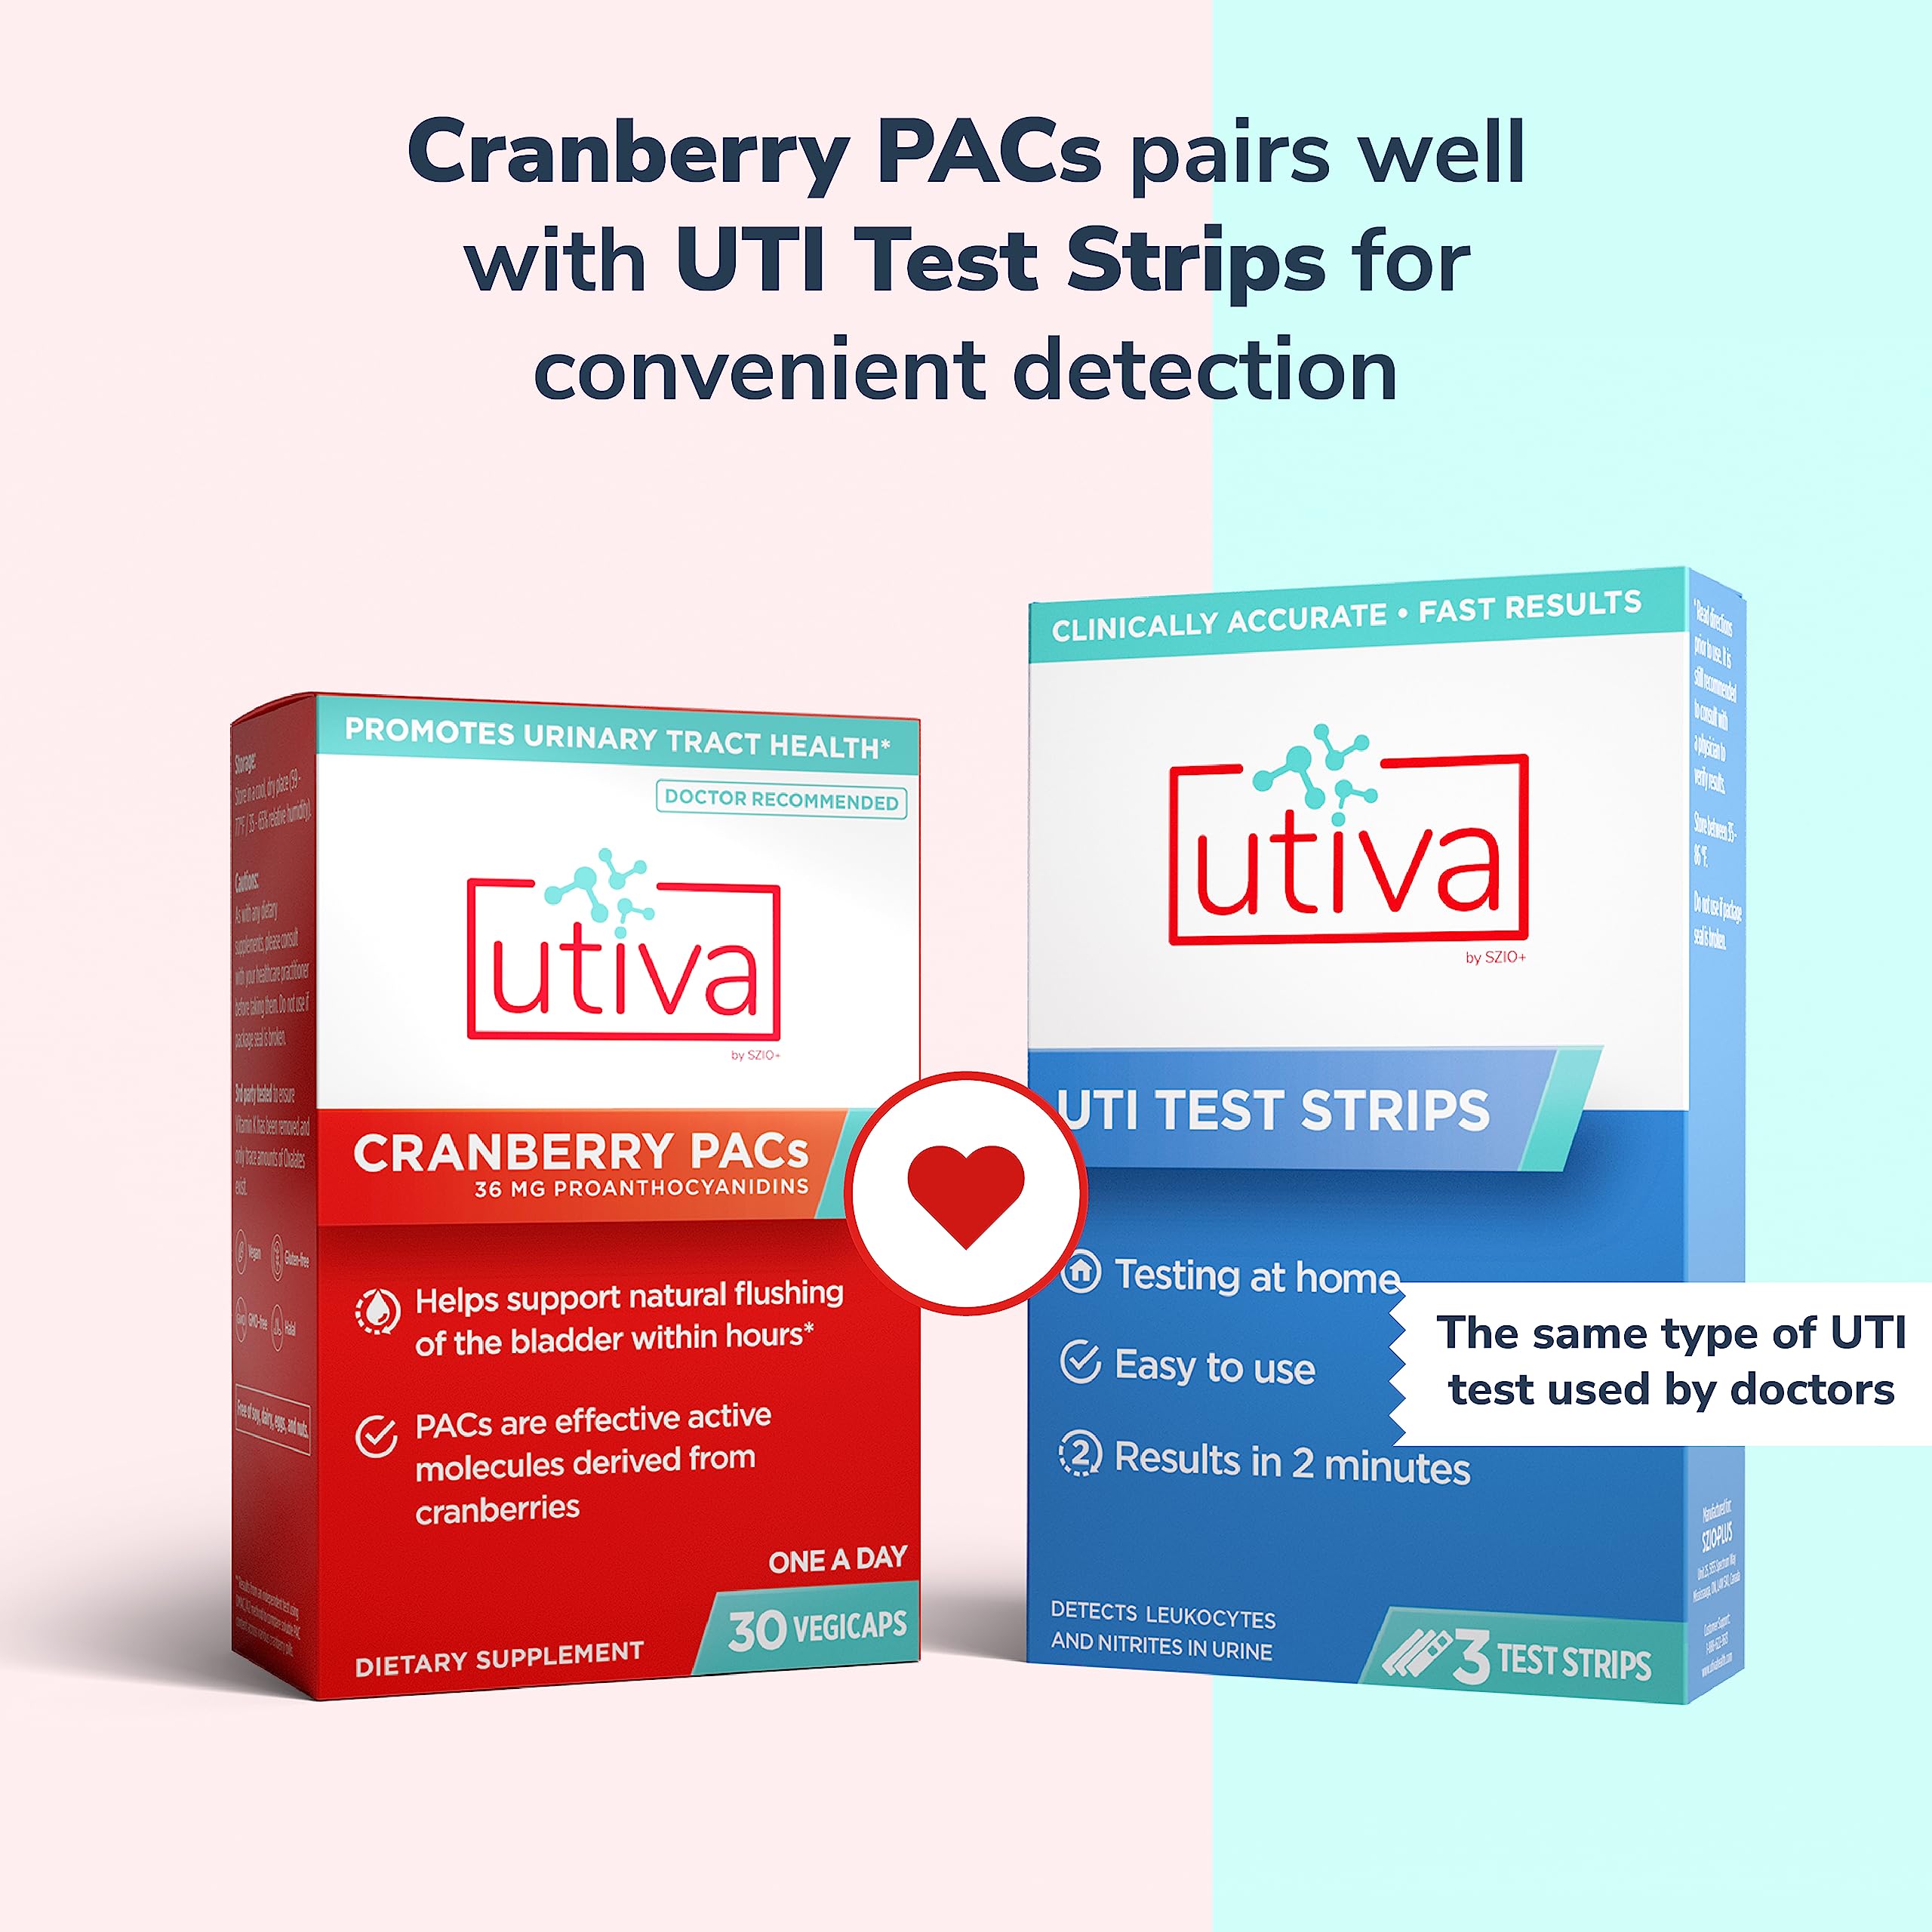 Utiva Cranberry PACs Supplement for Urinary Tract Health, 30 Vegi Capsules